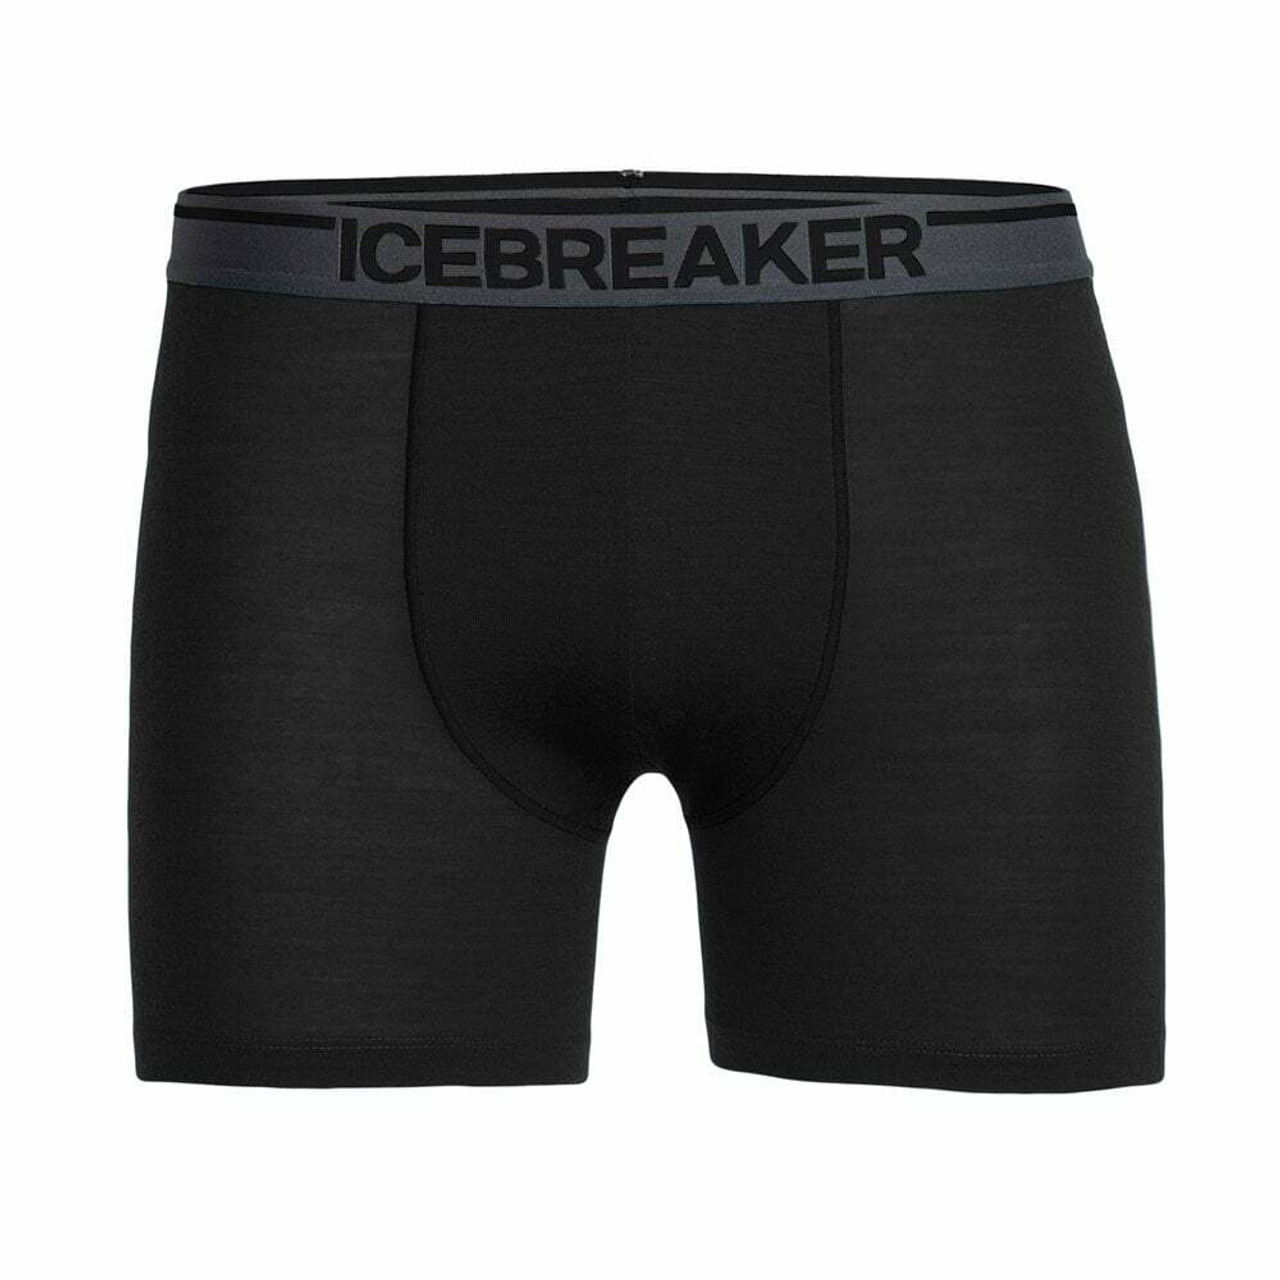 Icebreaker Anatomica Cool-Lite Boxers - Merino base layer Men's, Product  Review